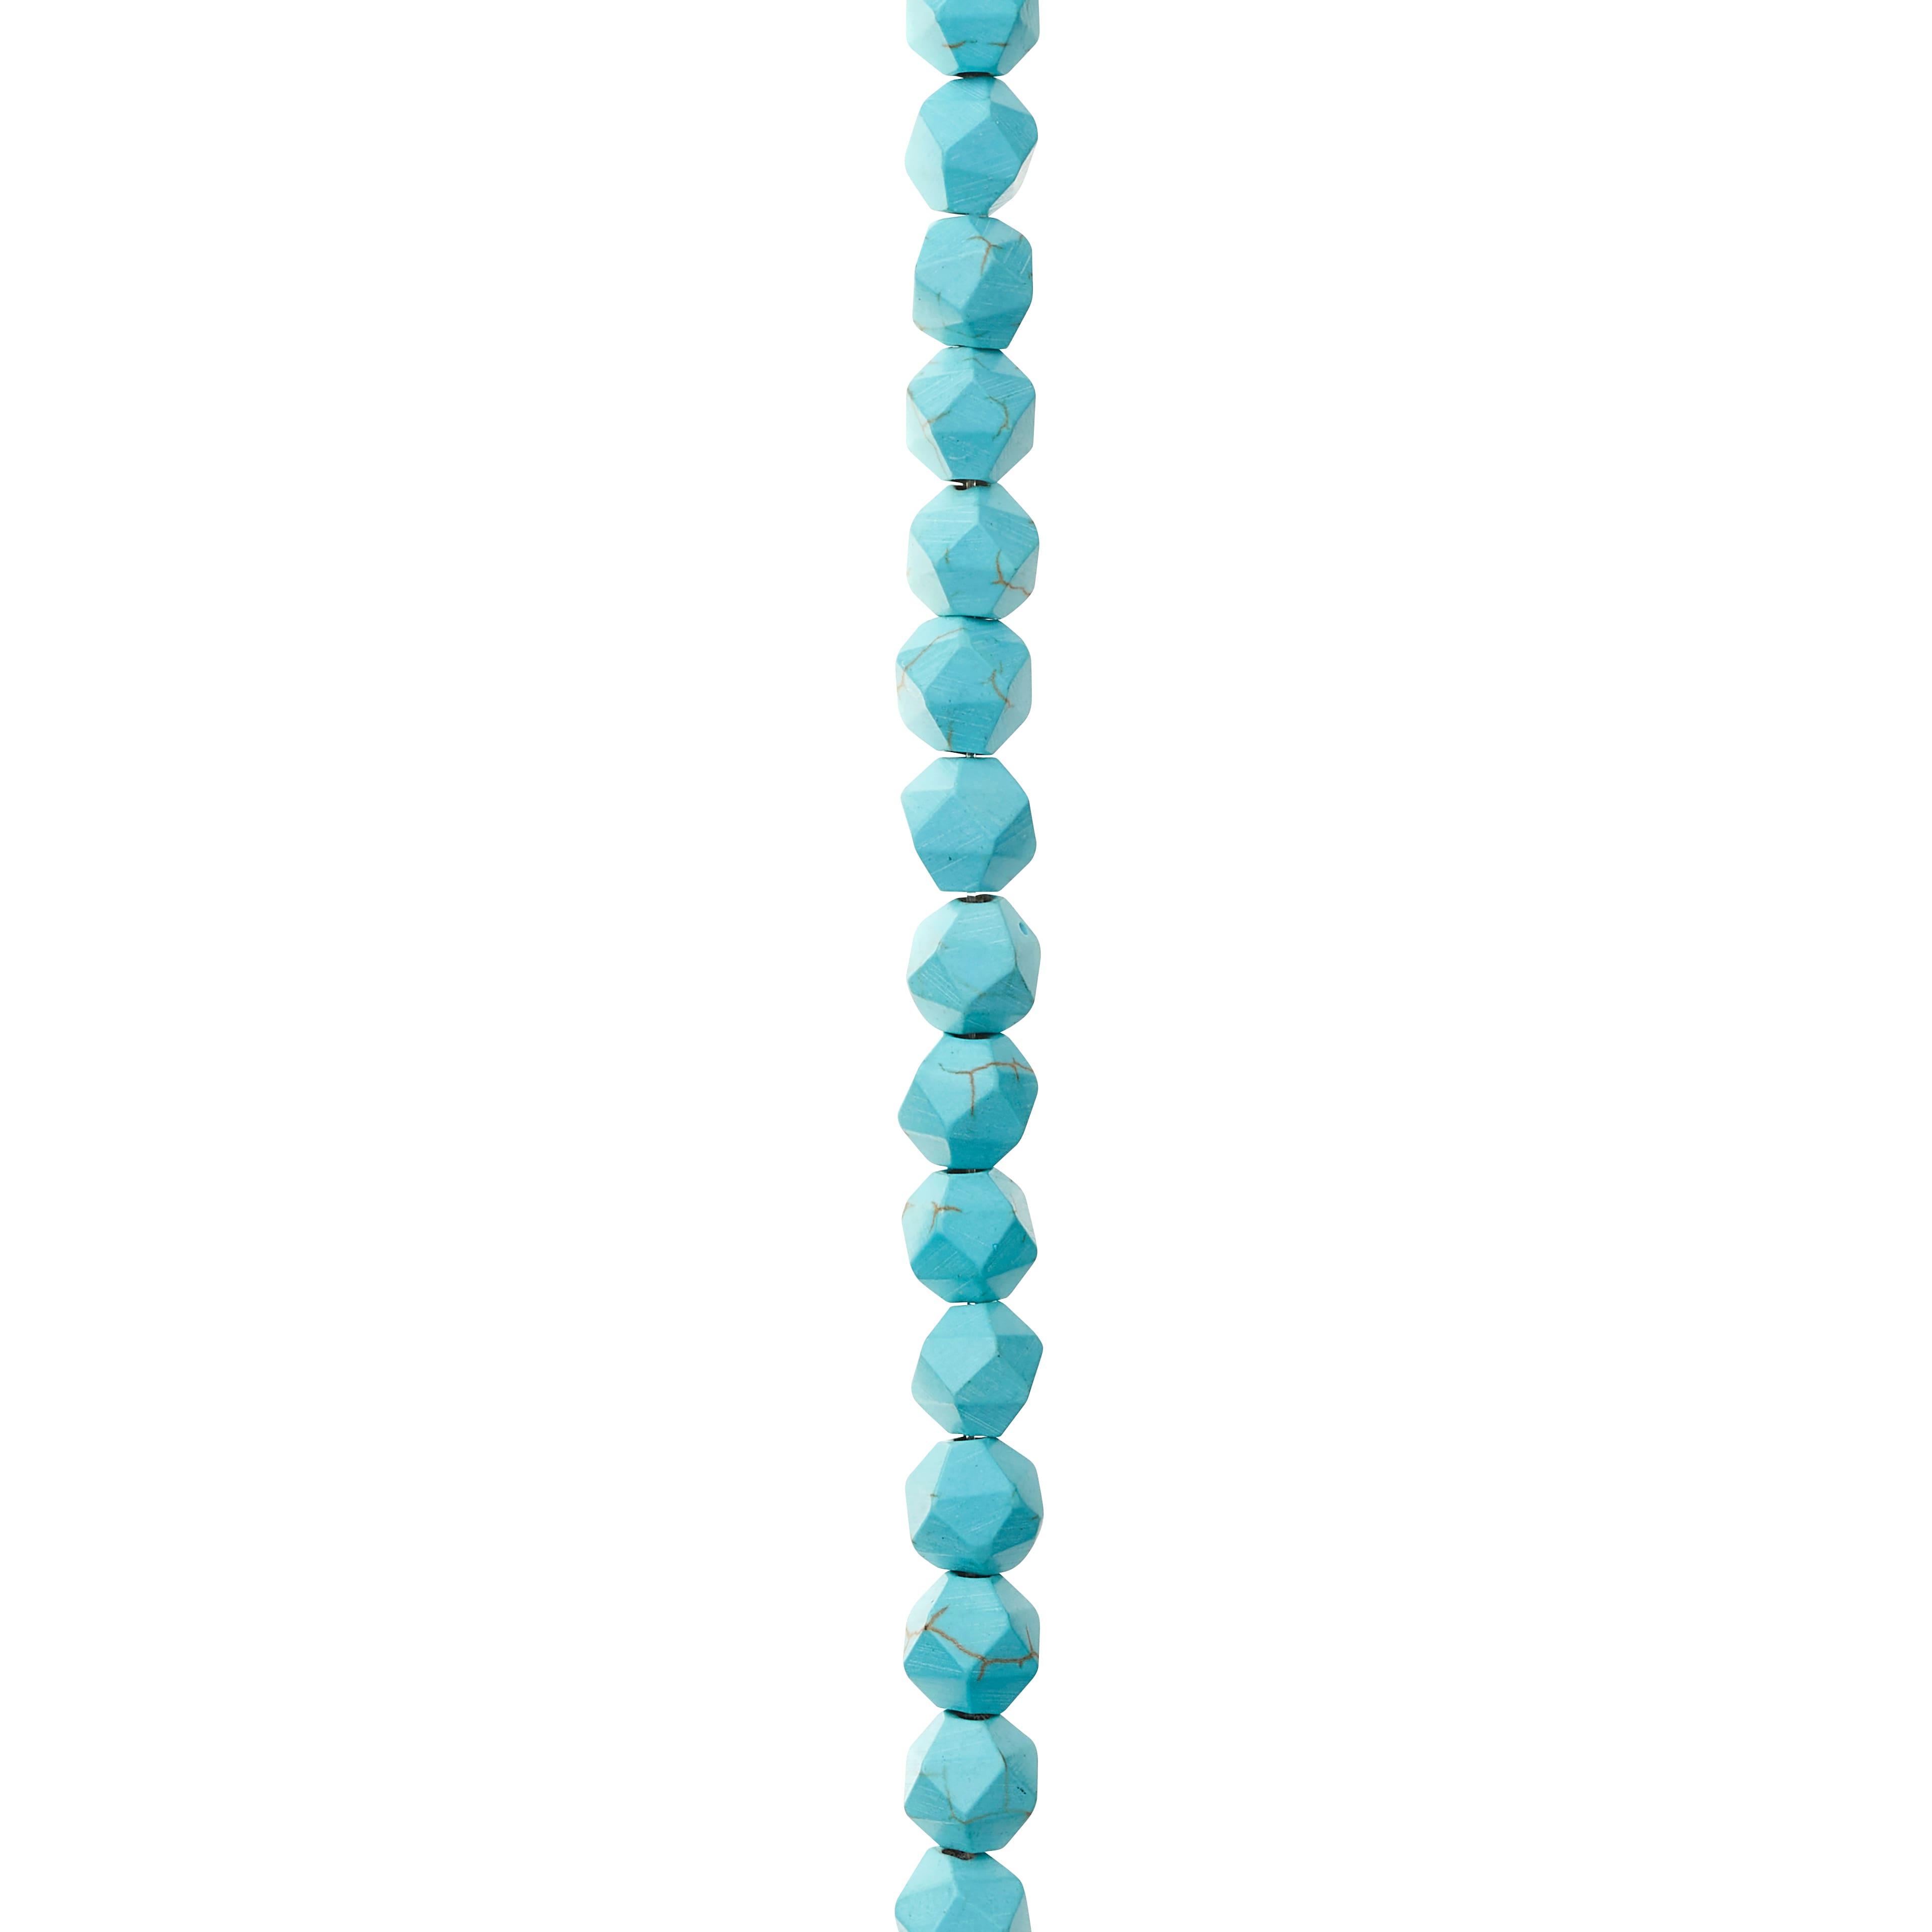 Alphabet Acrylic Cube Craft Beads by Bead Landing™, 5.5mm